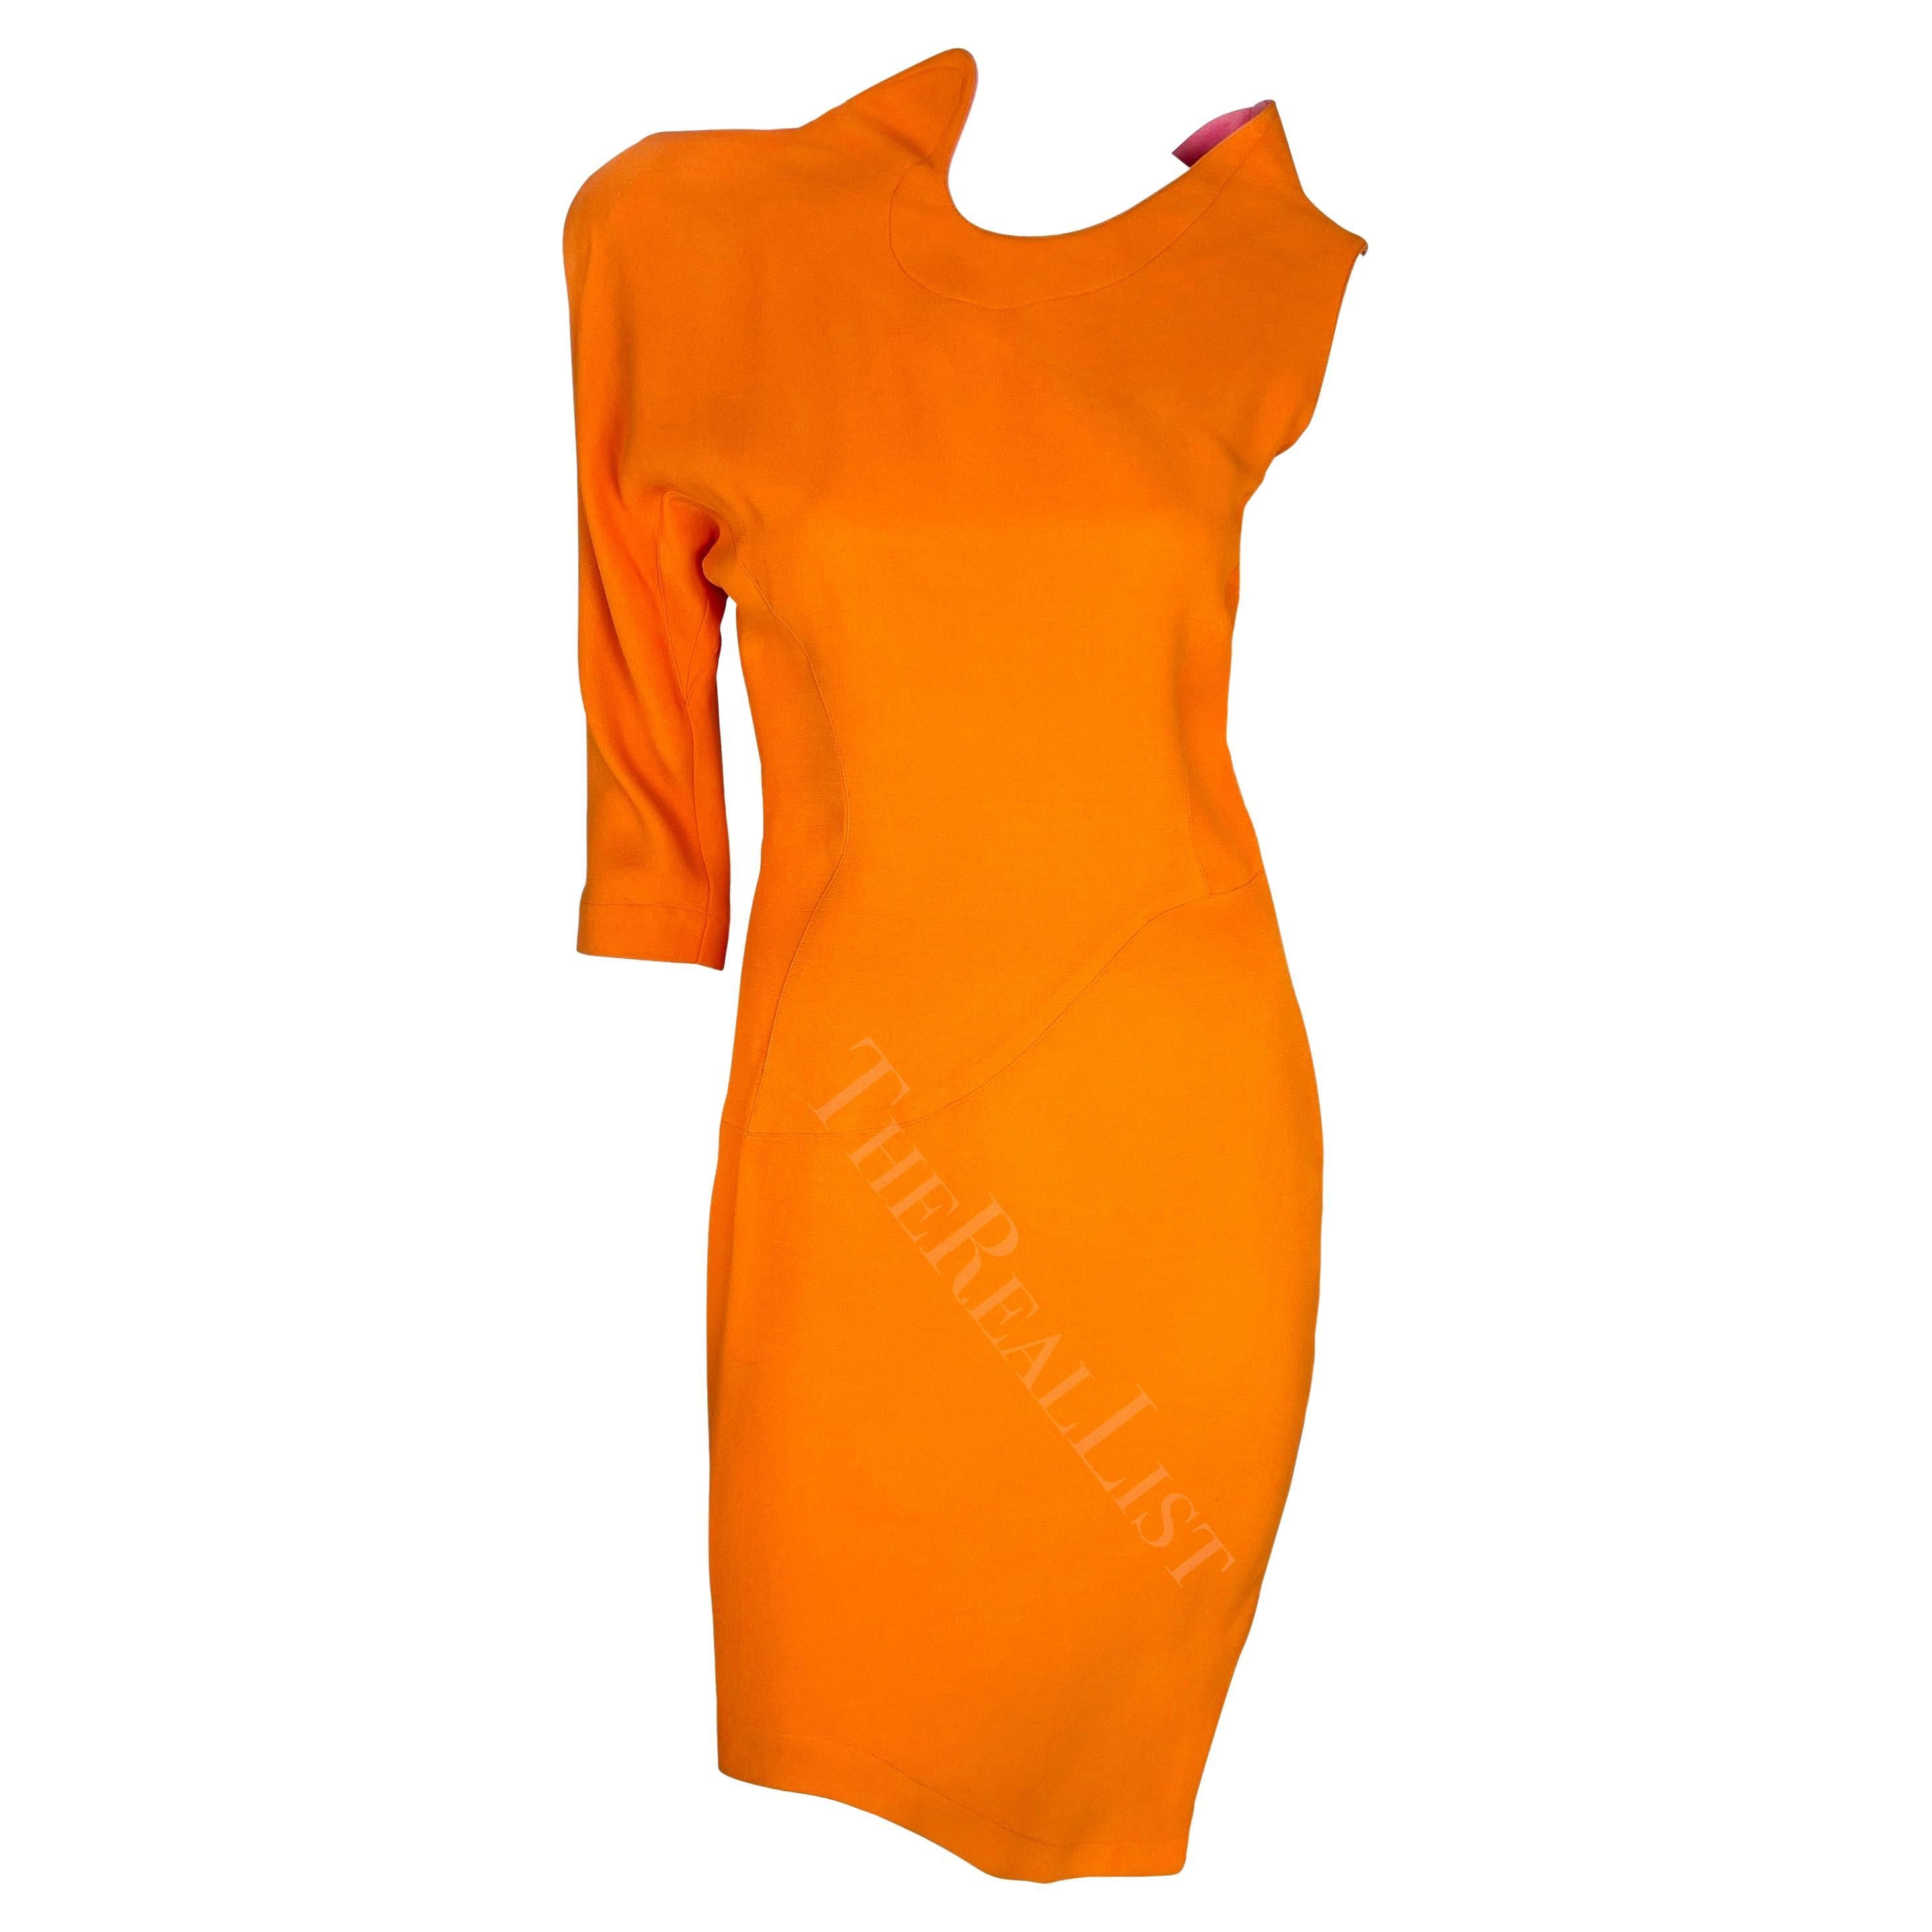 S/S 1988 Thierry Mugler Runway Ad Orange One Sleeve Sculptural Sahara Dress For Sale